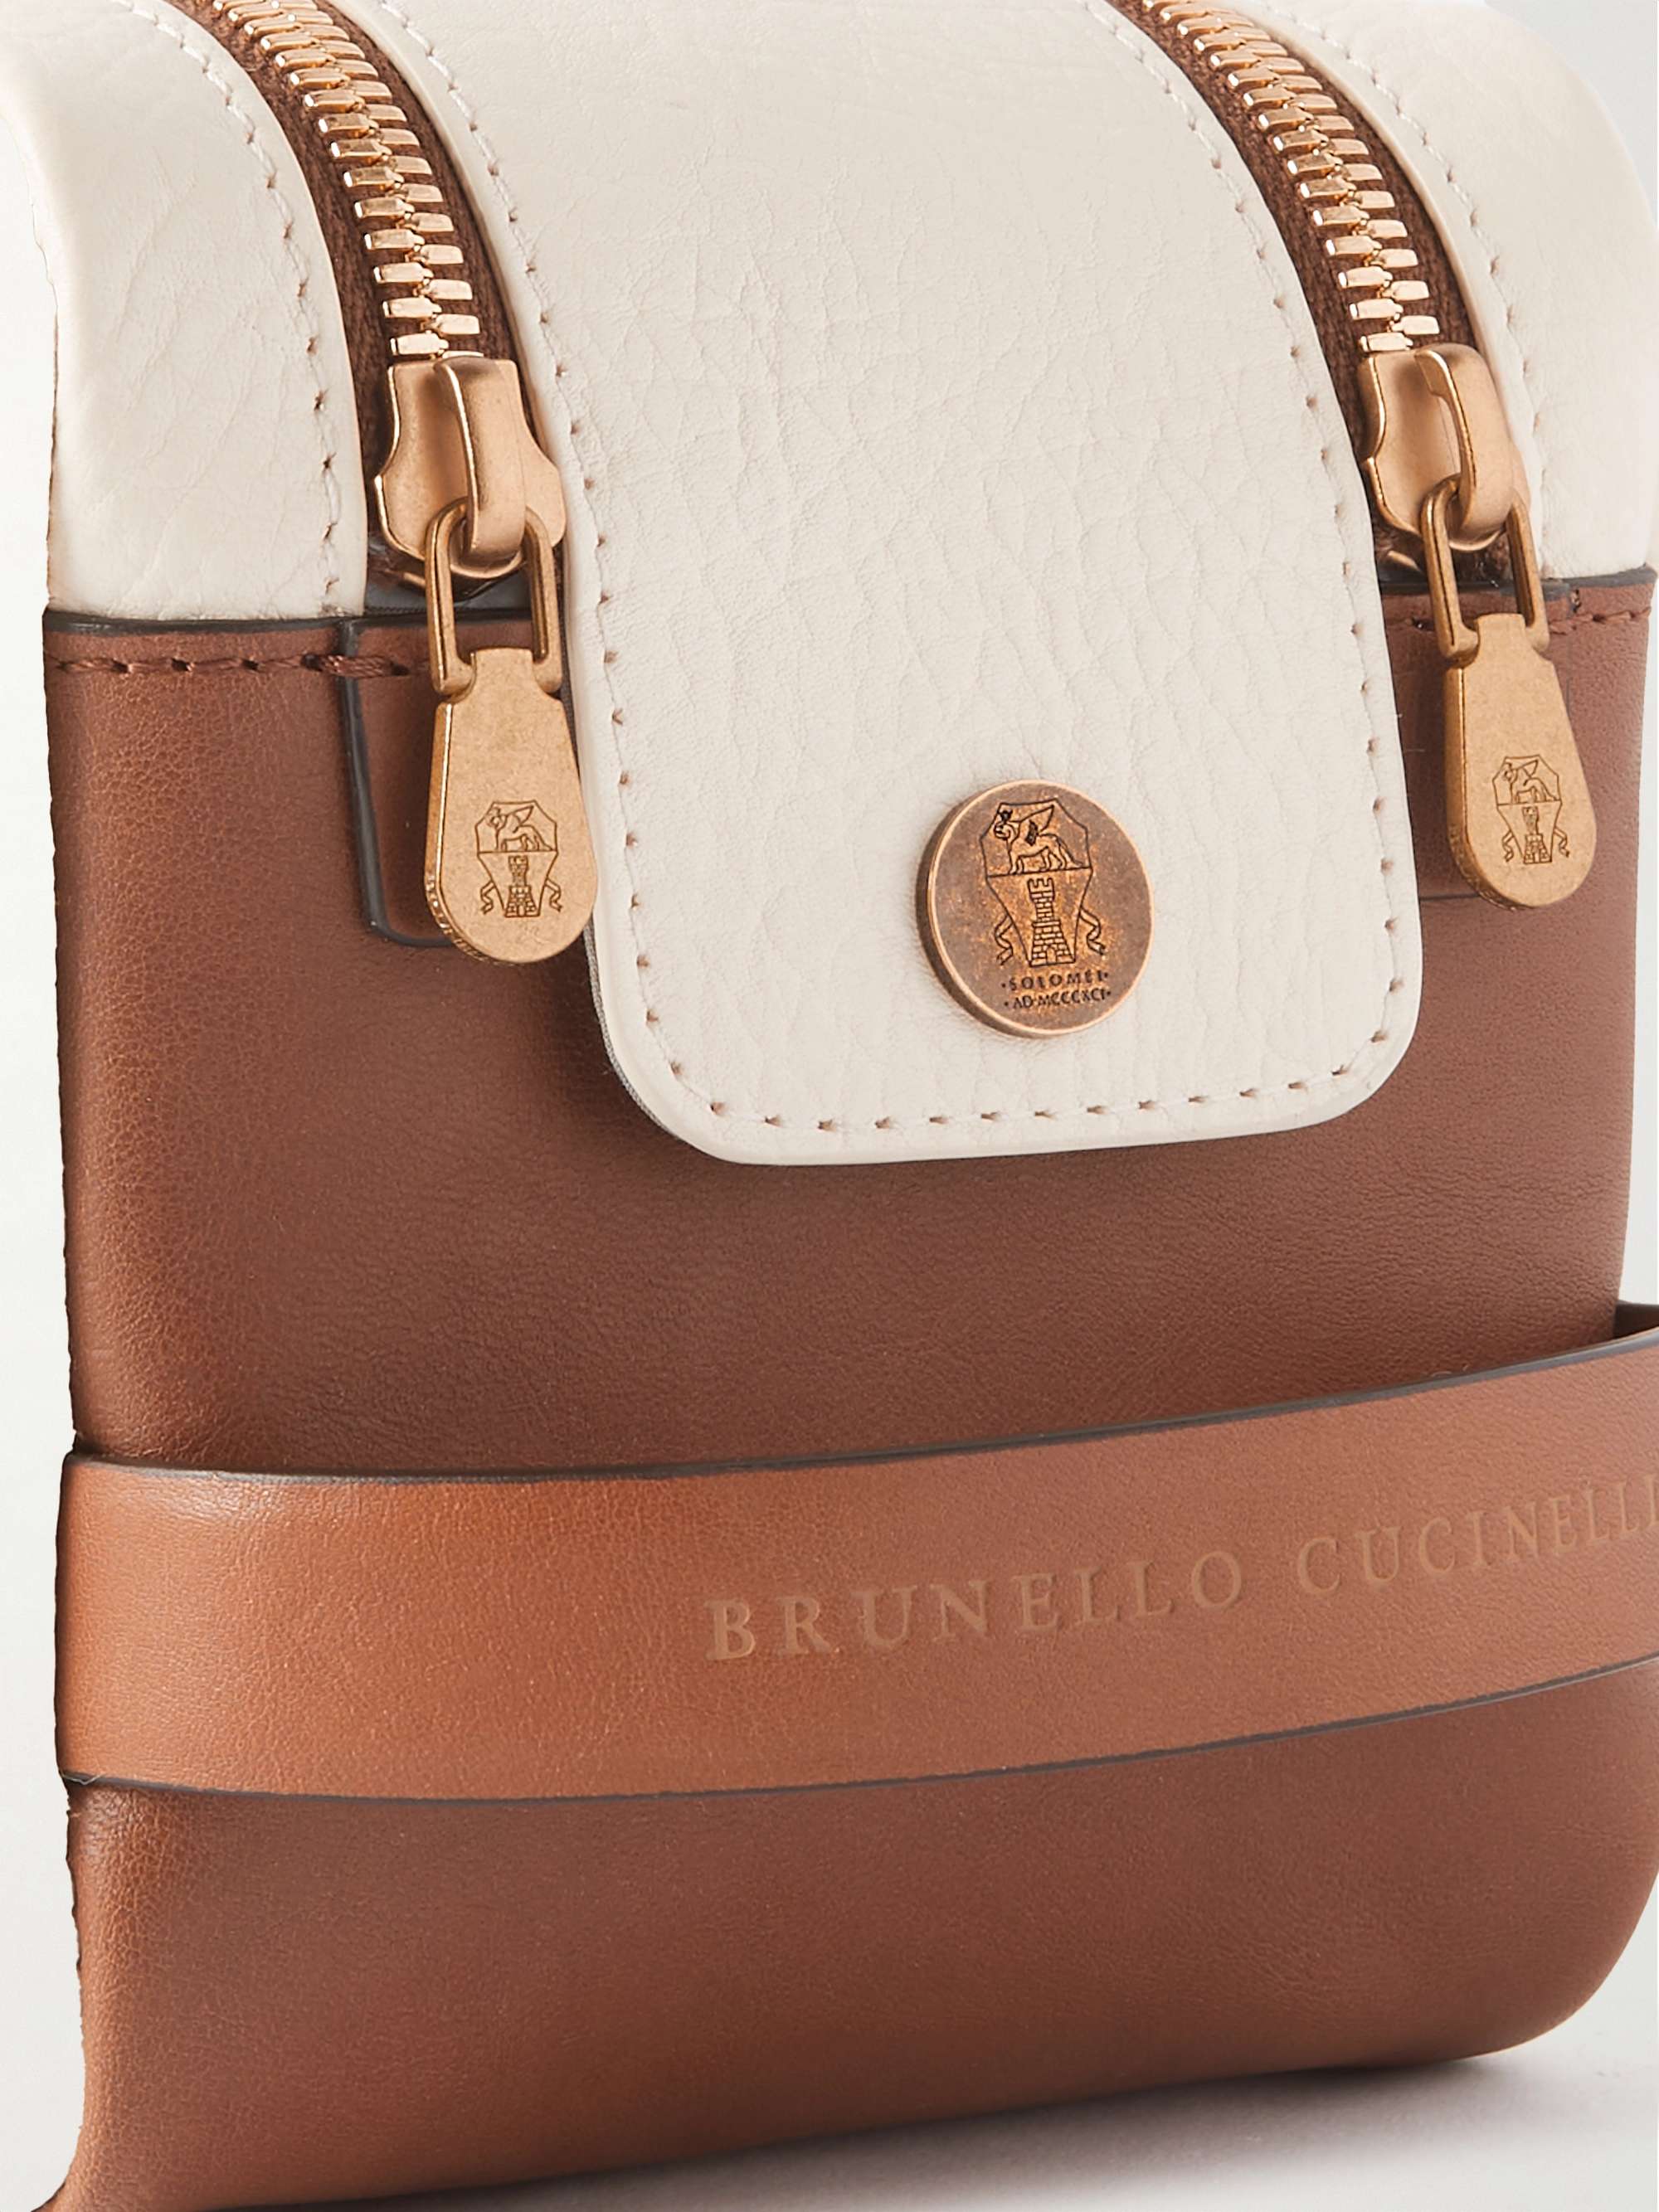 BRUNELLO CUCINELLI Two-Tone Leather Wash Bag